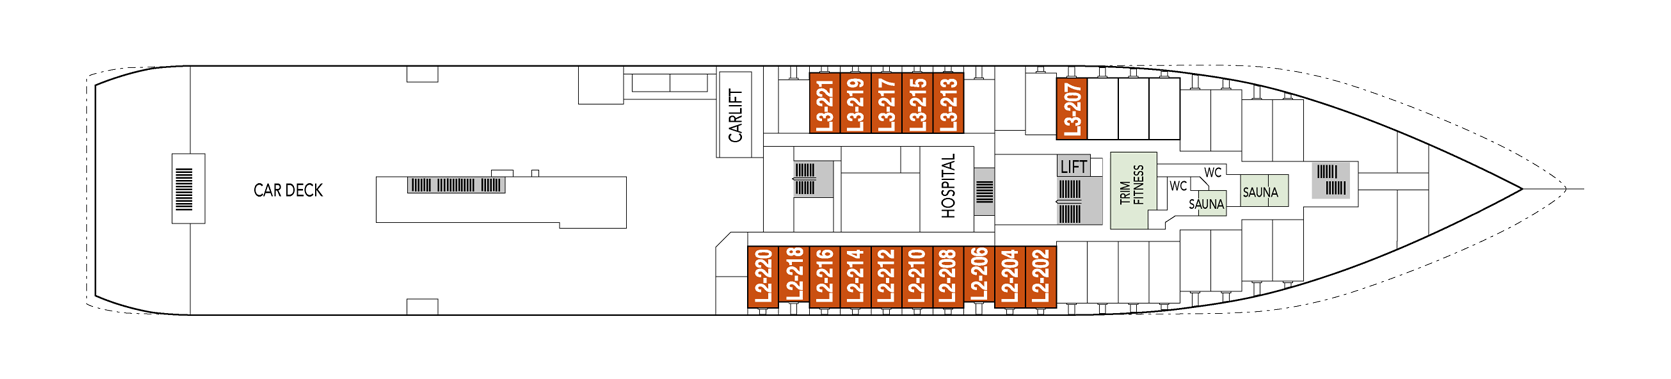 1548636349.2205_d262_Hurtigruten MS Nordnorge Deck Plans Deck 2.png